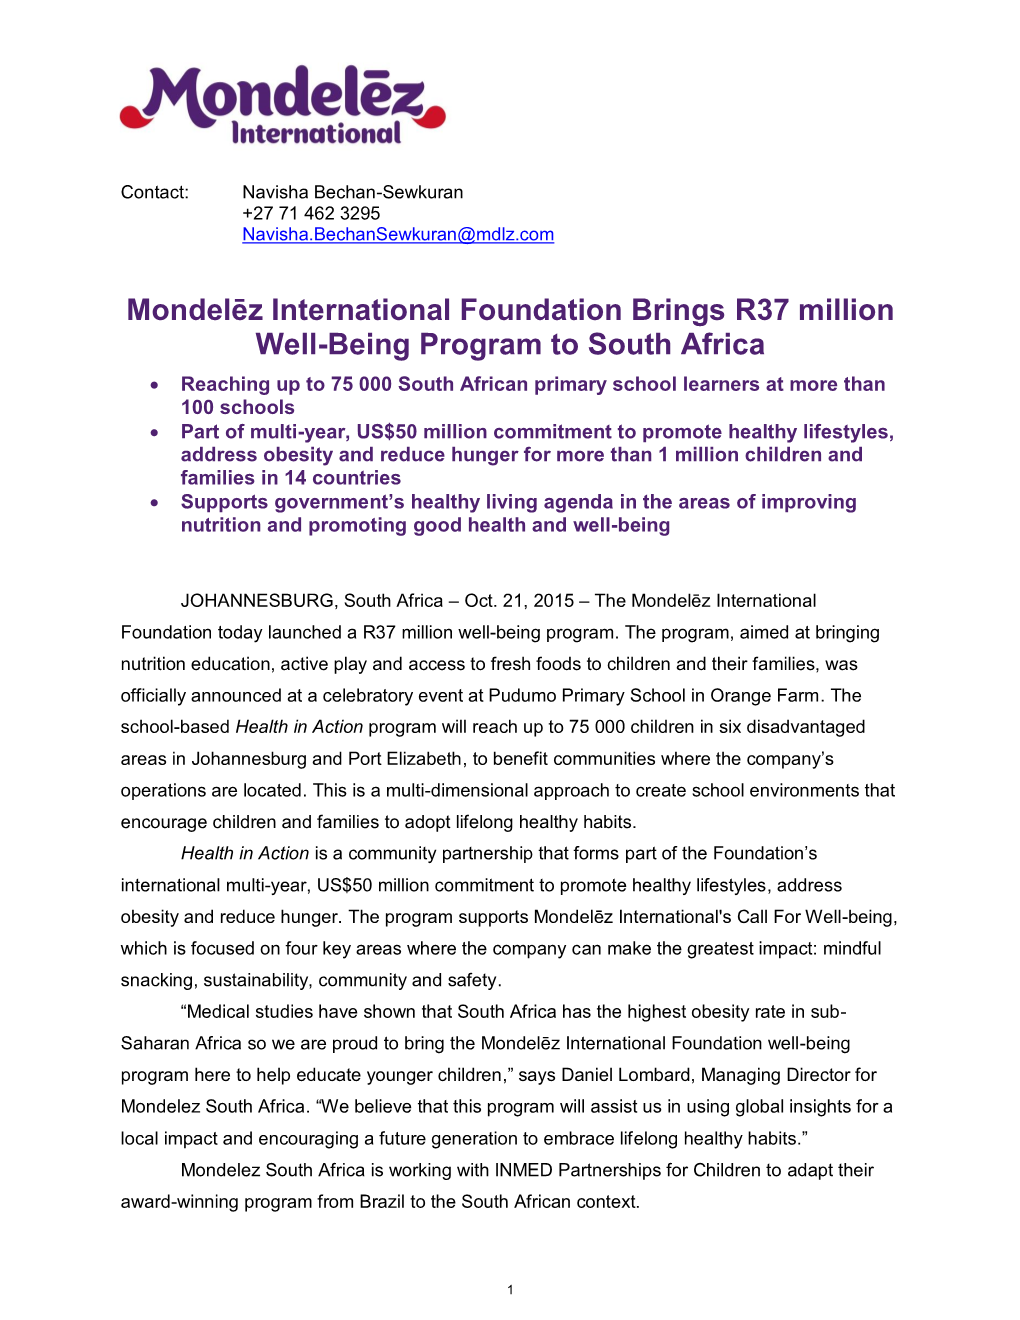 Mondelēz International Foundation Brings R37 Million